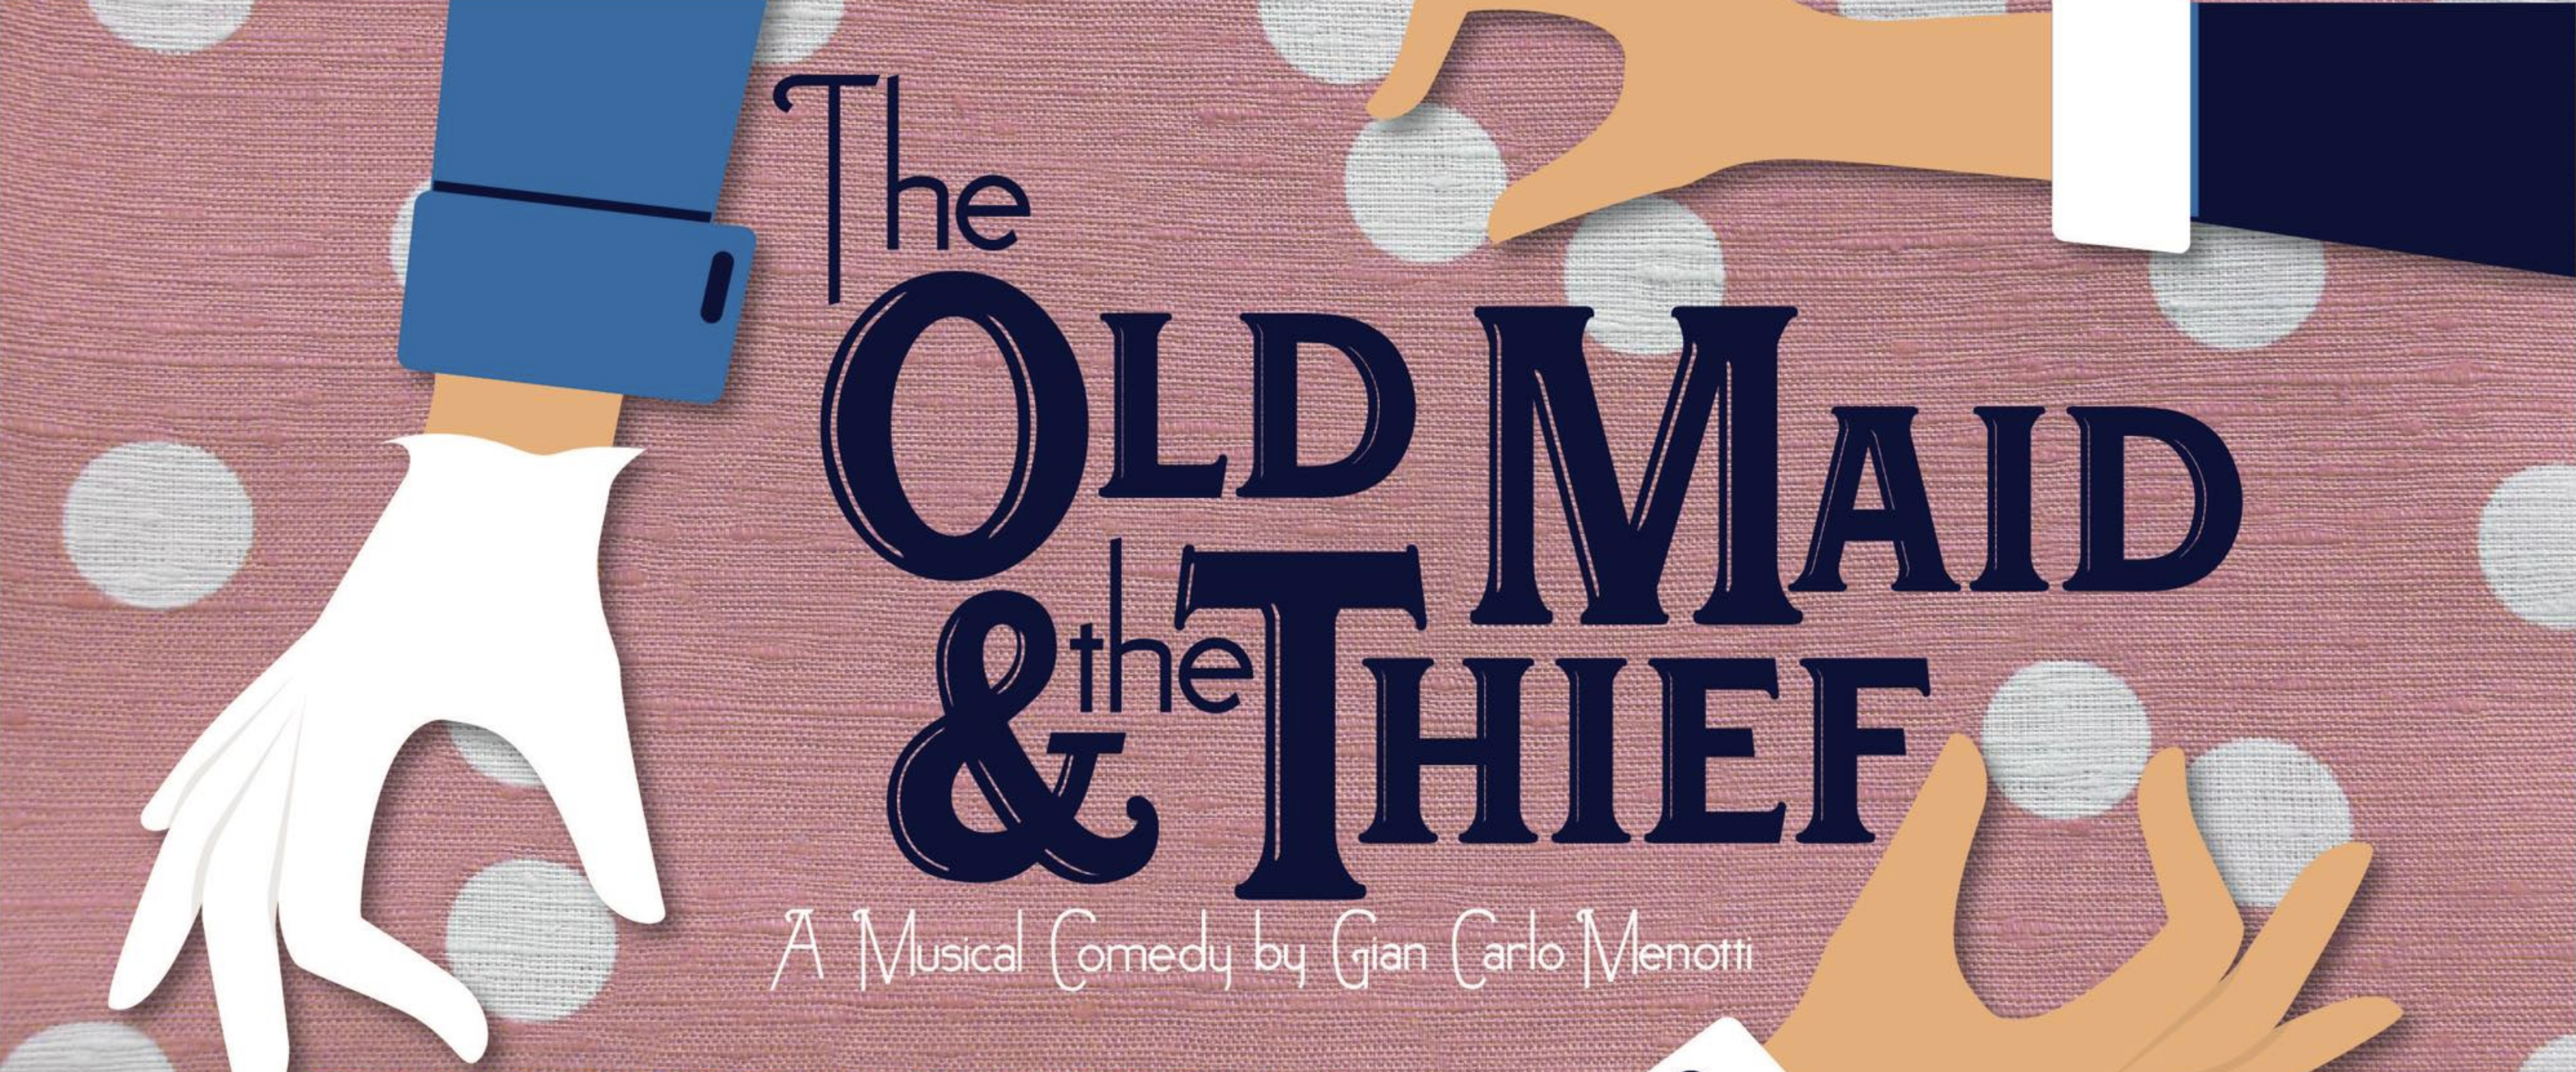  Ouachita Opera Theatre to present opera “The Old Maid and the Thief” Nov. 1-4.